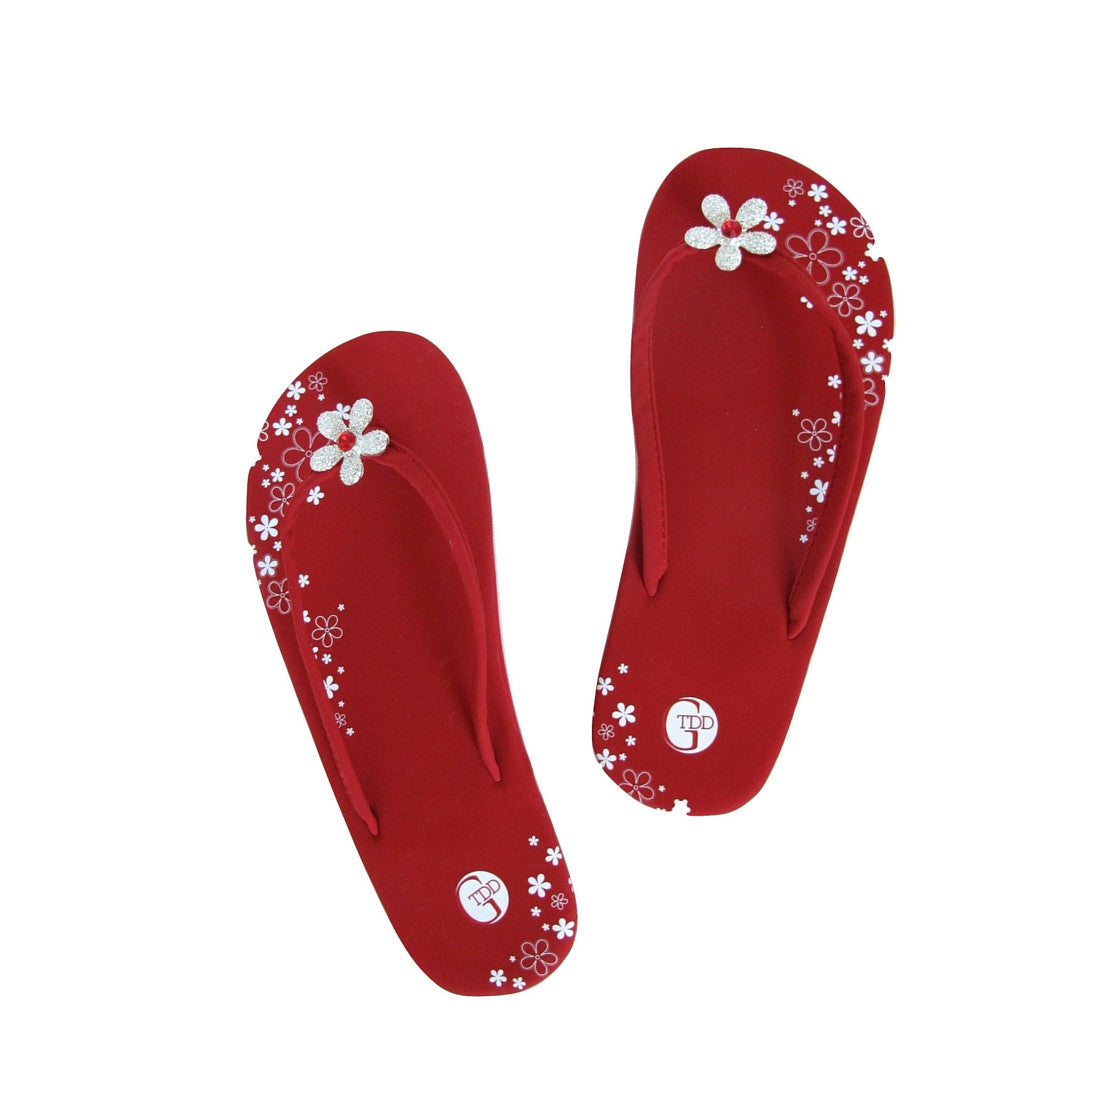 red sparkly flip flops